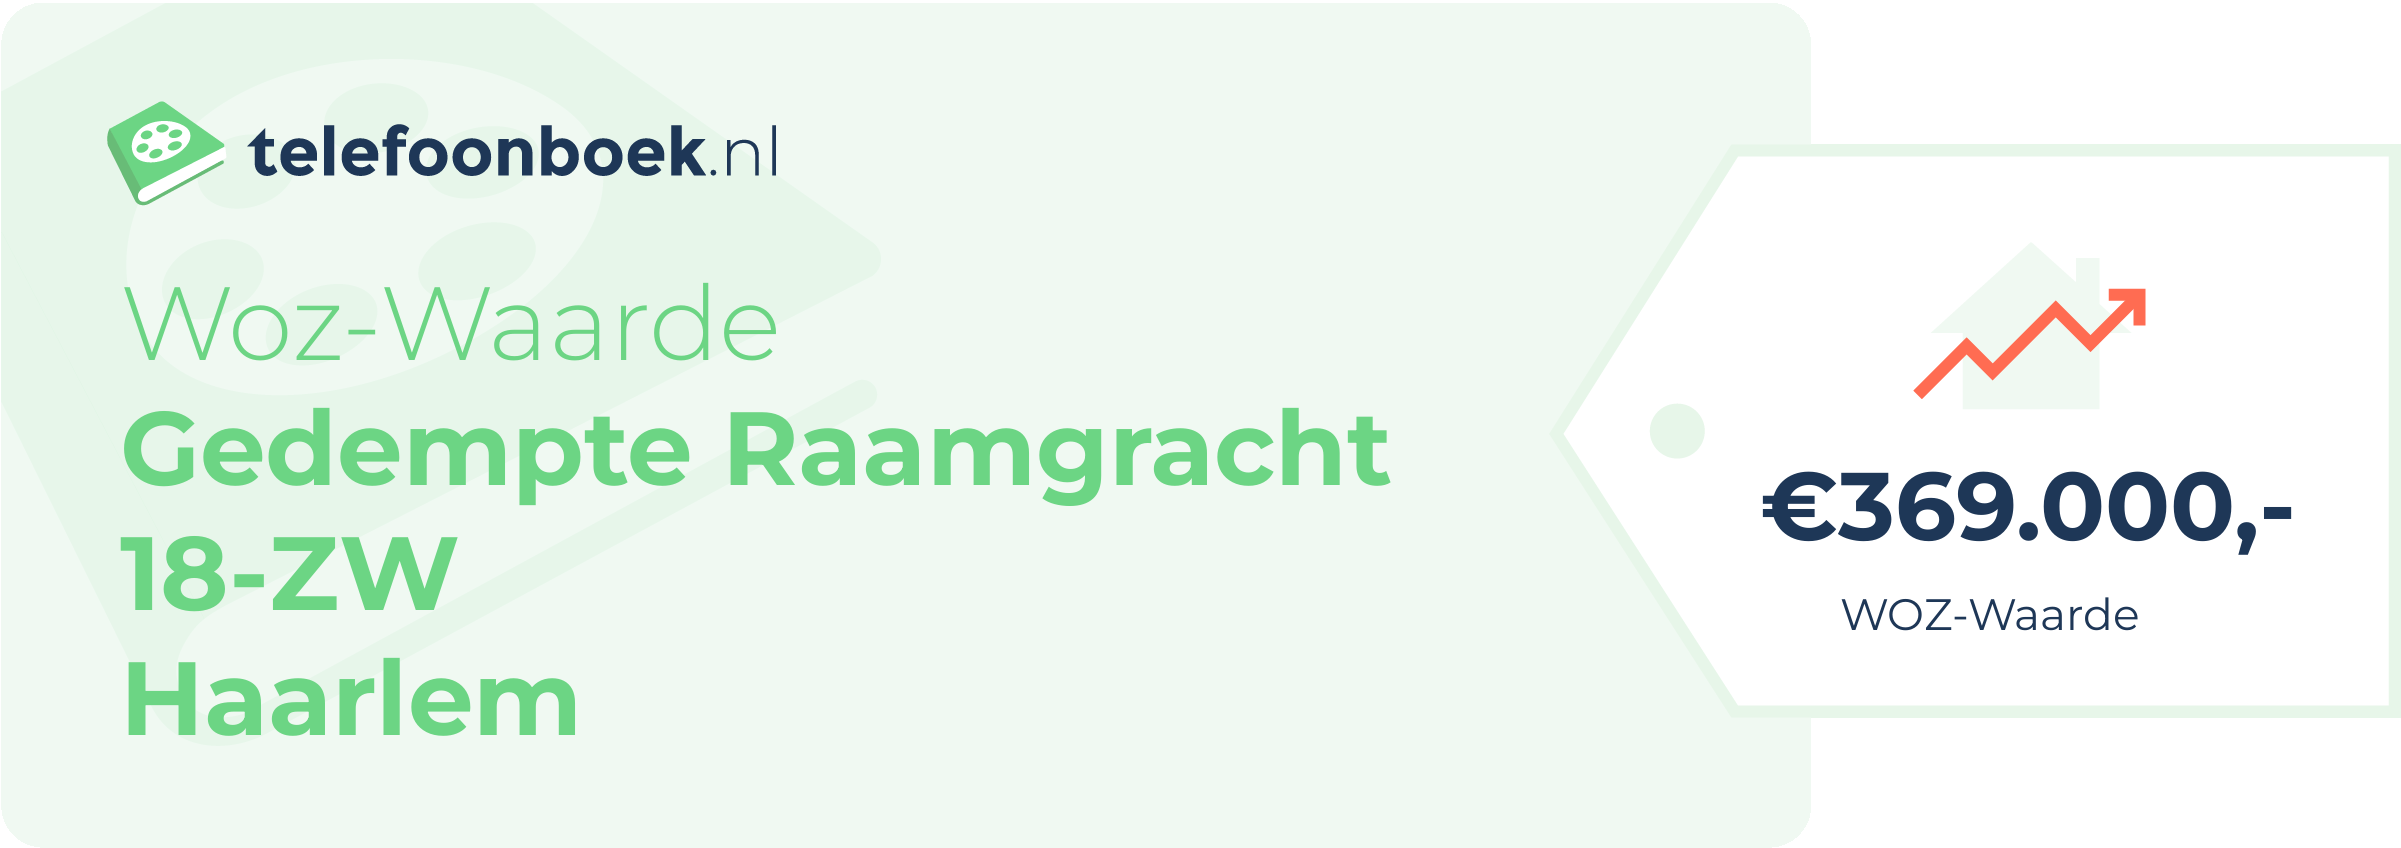 WOZ-waarde Gedempte Raamgracht 18-ZW Haarlem